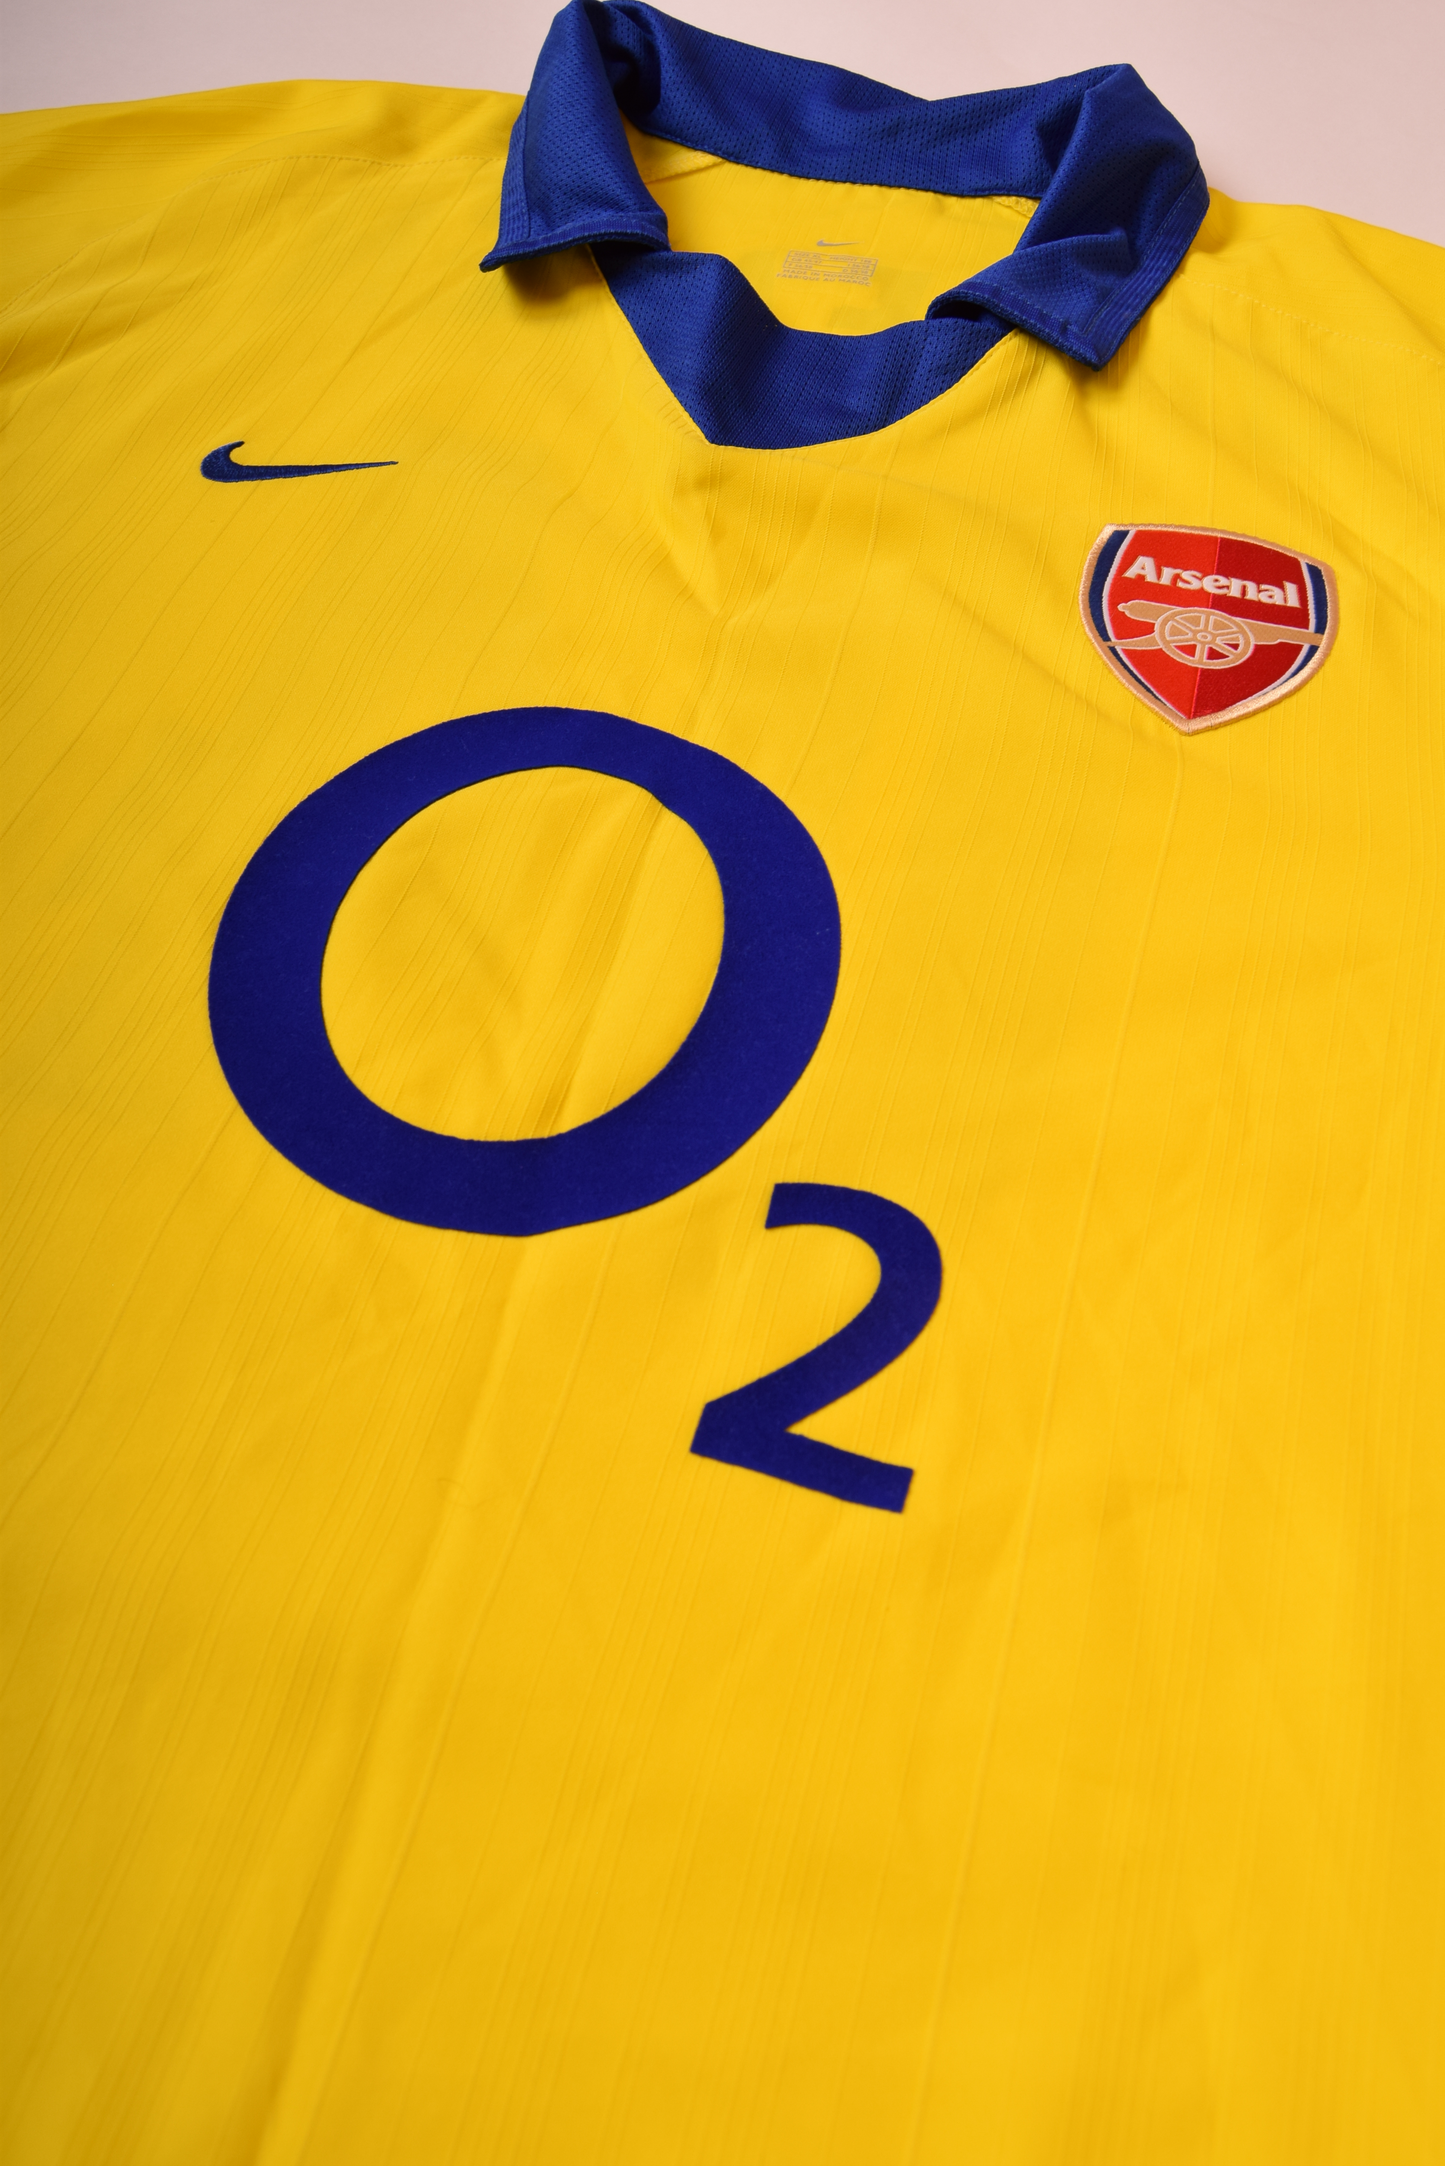 Arsenal Nike Football Shirt Third Away  '03 - '04 Size XL O2 04 Unbeatean